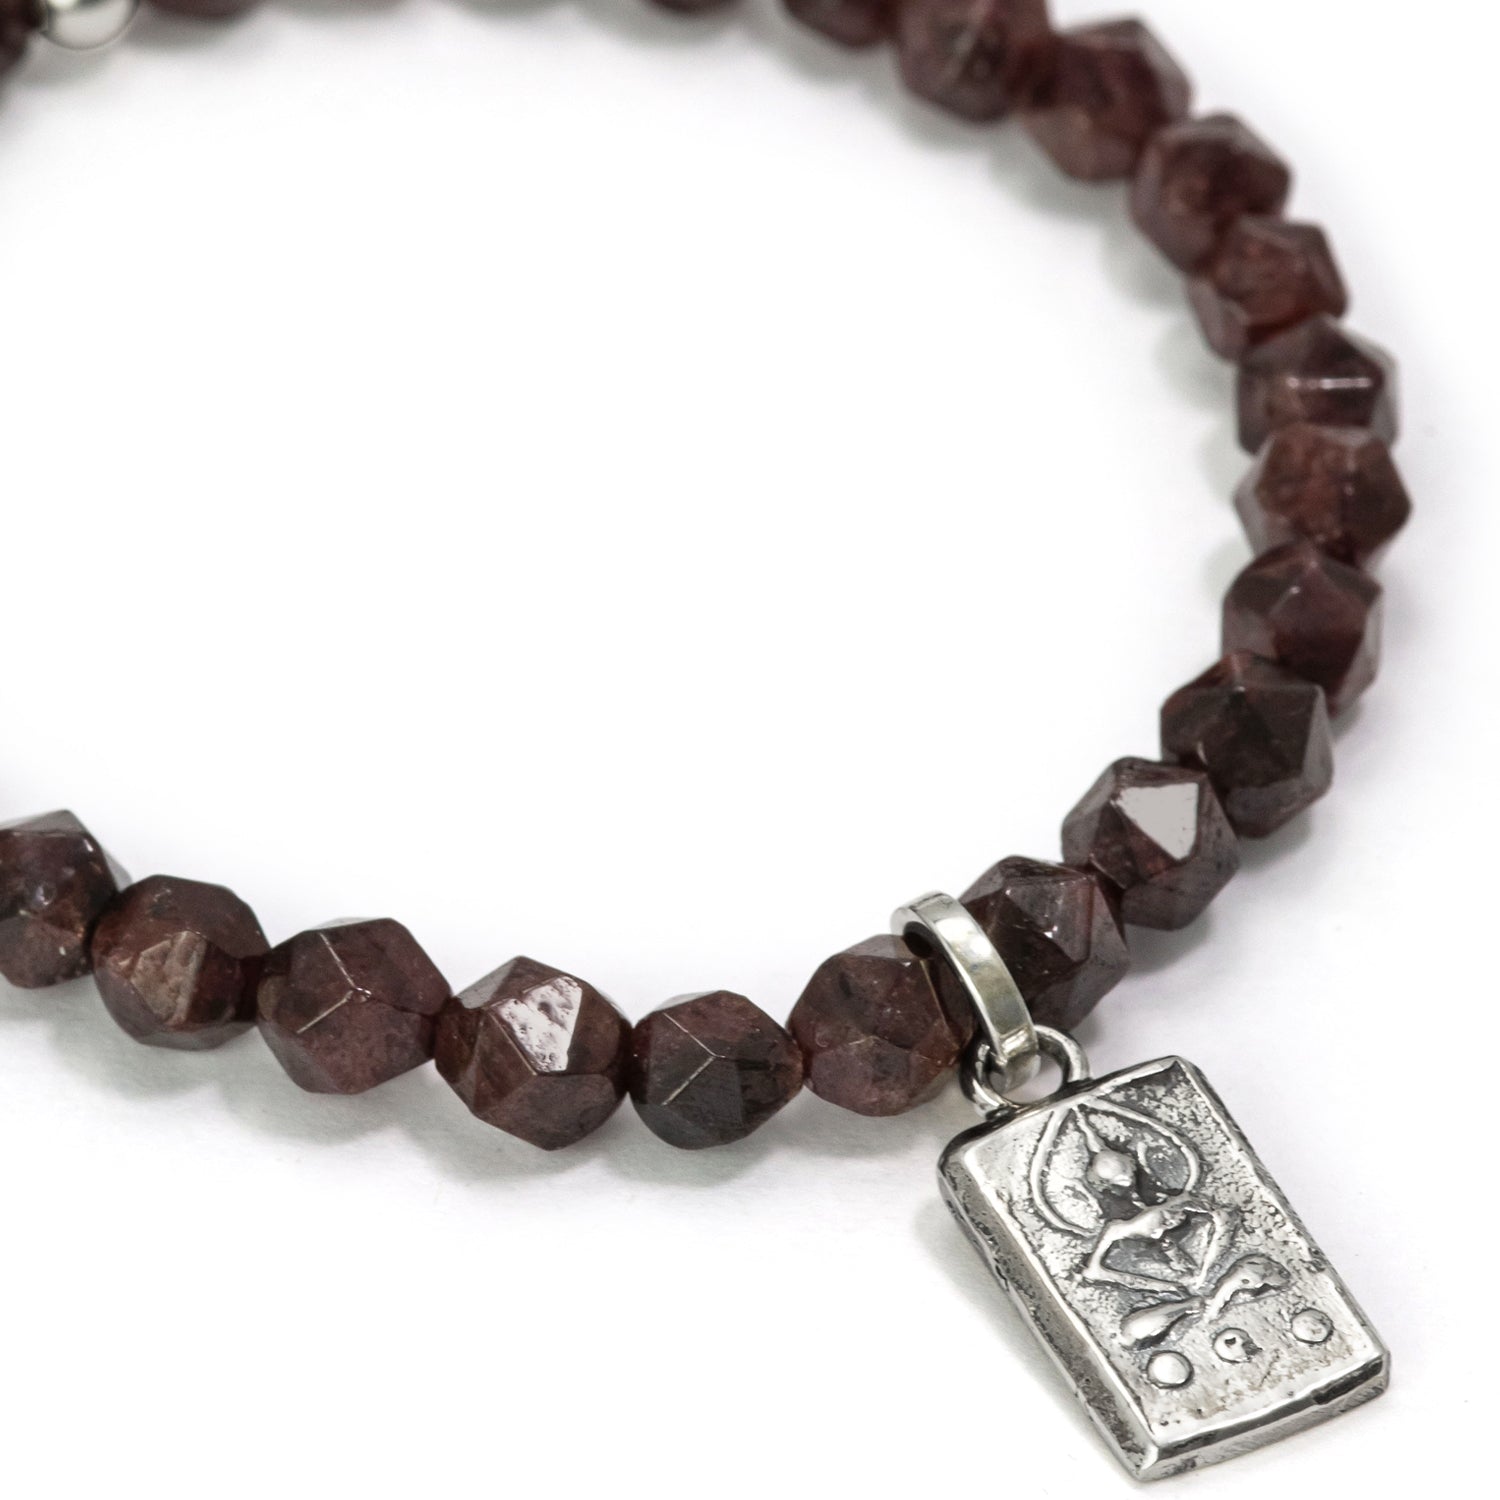 Buddha bracelet with irregularly cut garnet gemstones and sterling silver pendant from ETERNAL BLISS - Spiritual jewelry